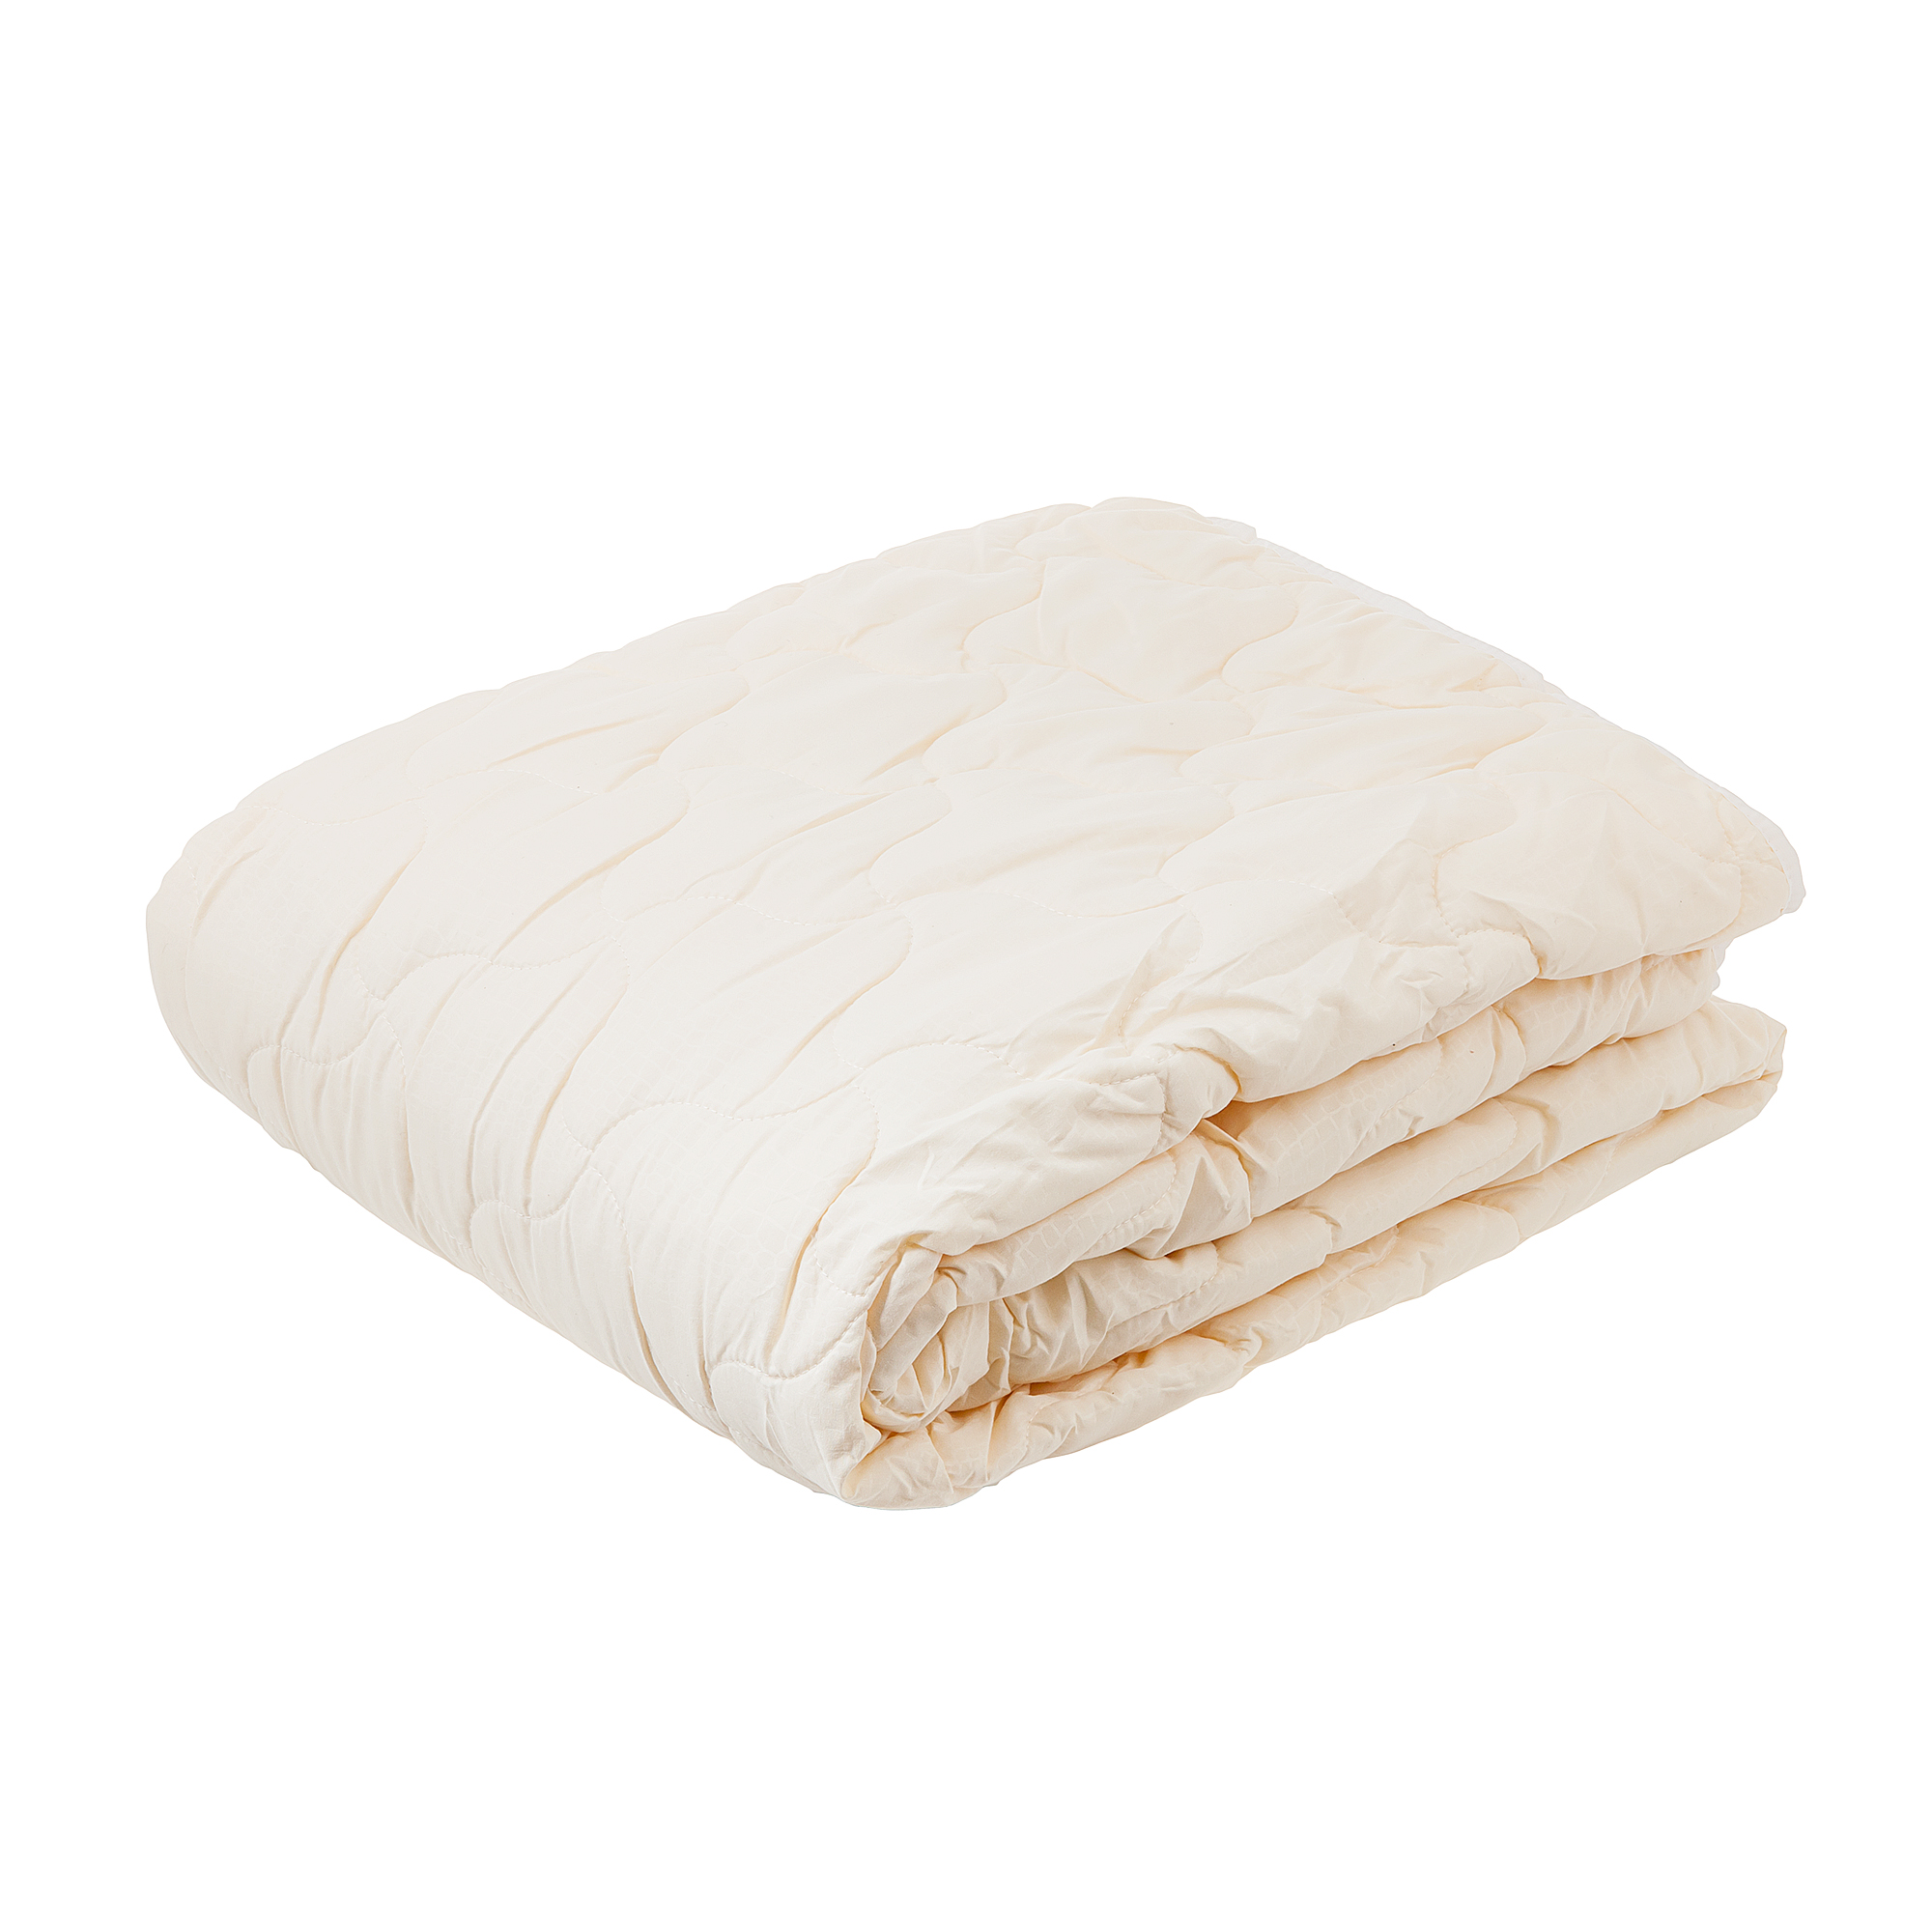 Одеяло – плед Belashoff летнее 200x220 одеяло стеганое белое золото 200x220 belashoff